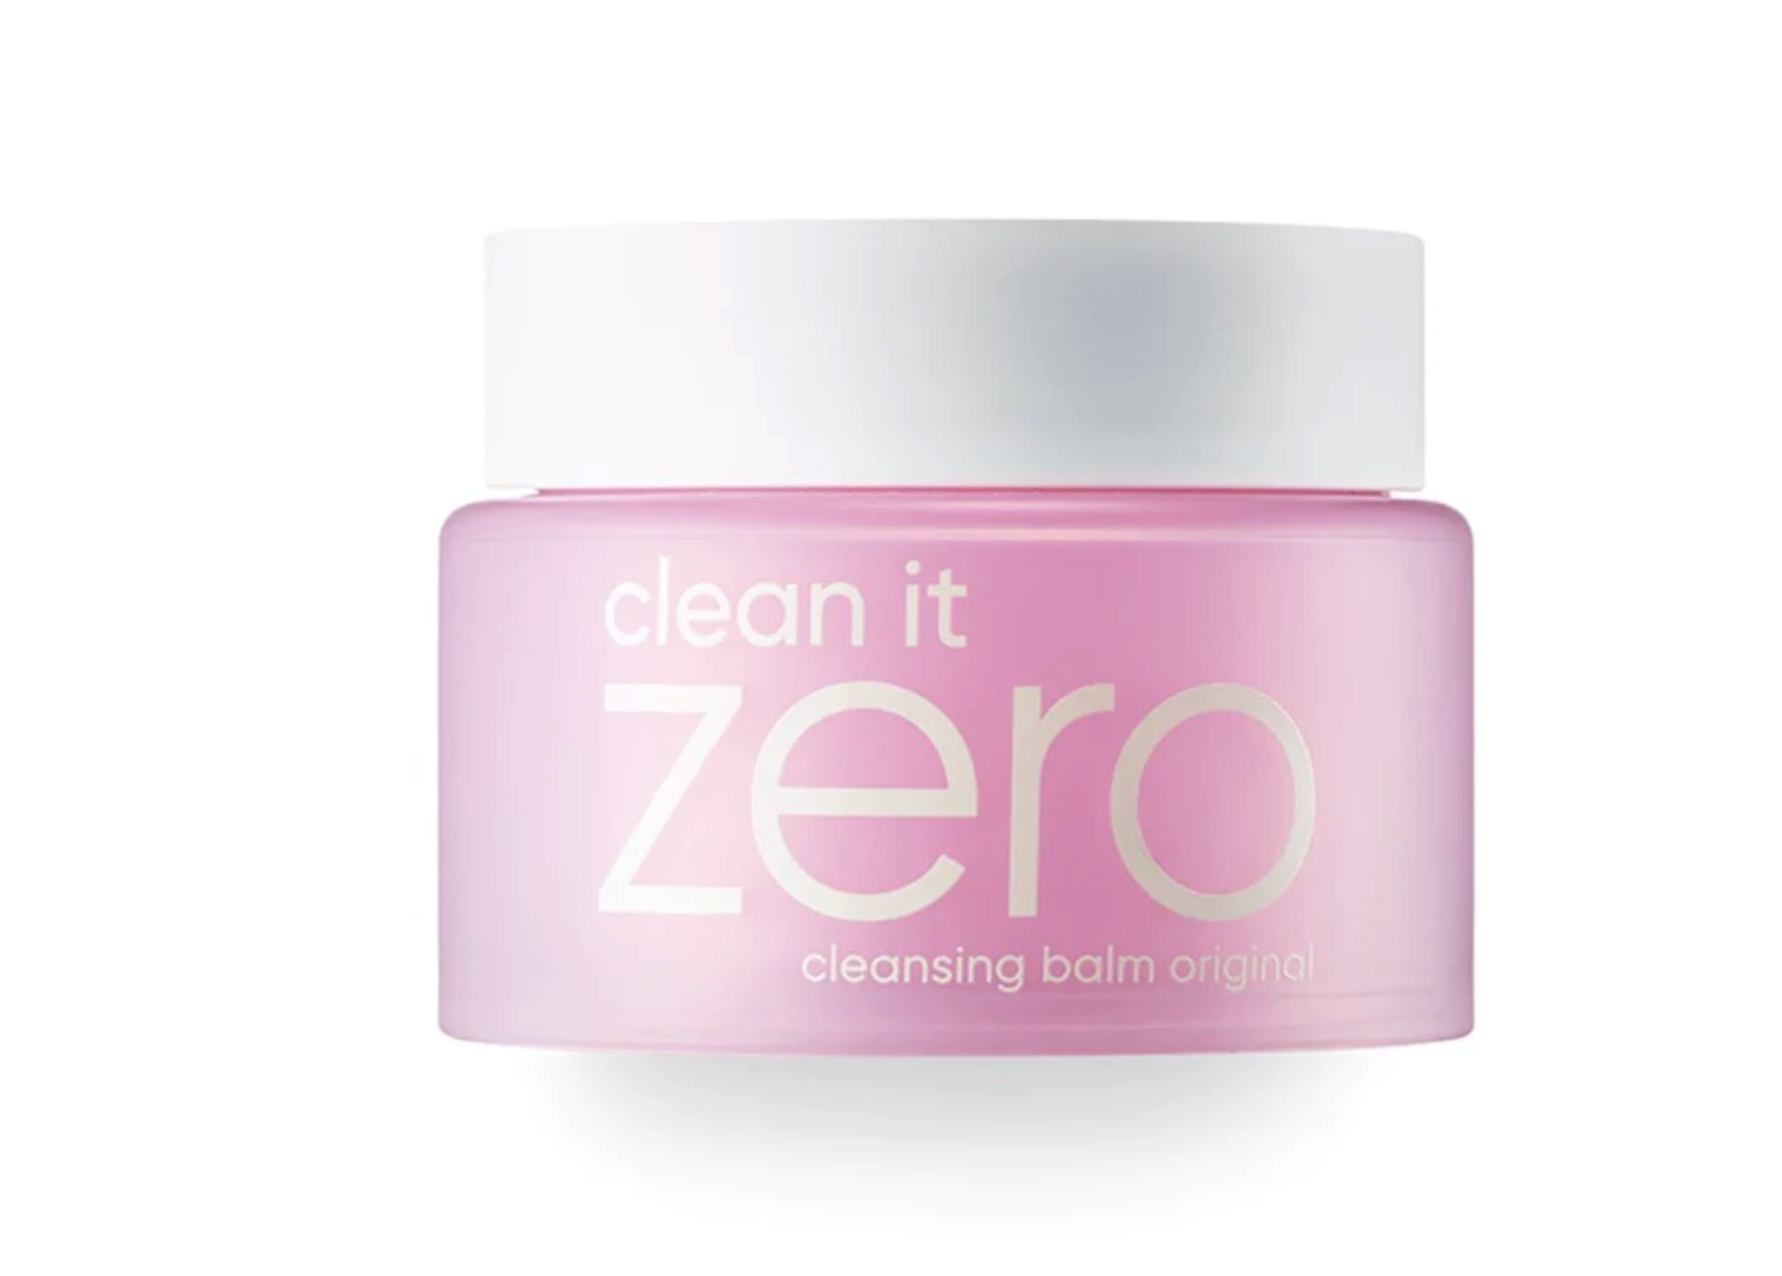 Banila & Co Clean It Zero Cleansing Balm Original